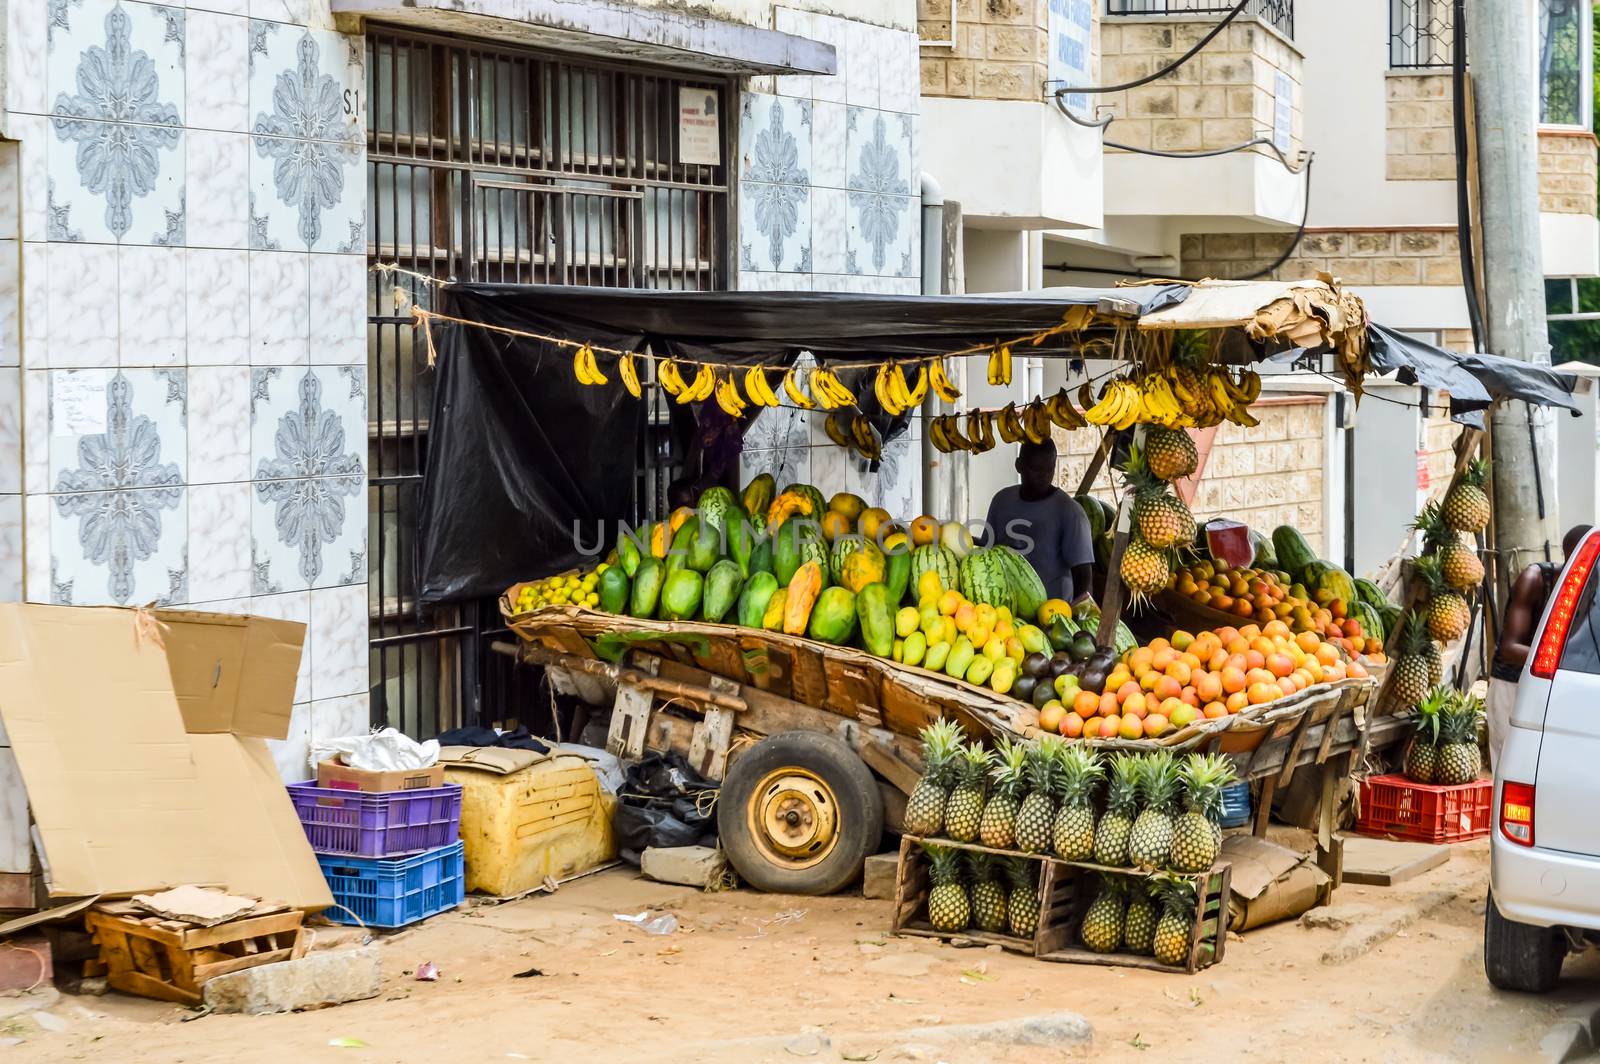 Mombasa, Kenya, Africa-10/01/2017. Display of vegetables on a trailer on a street in Mombasa in Kenya in Africa